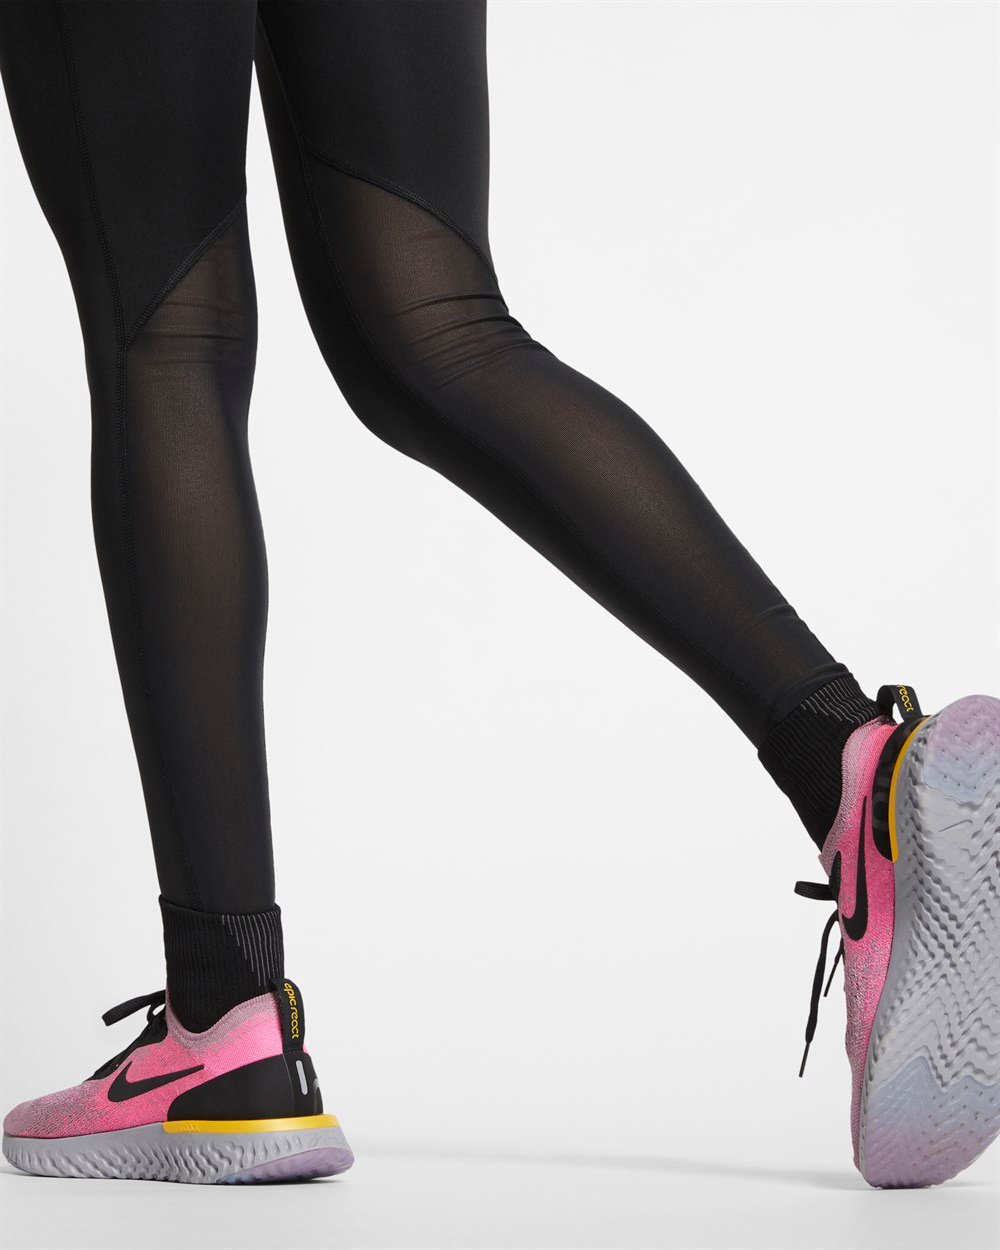 Nike Fast Tights Kadın Siyah Tayt AT3103-010